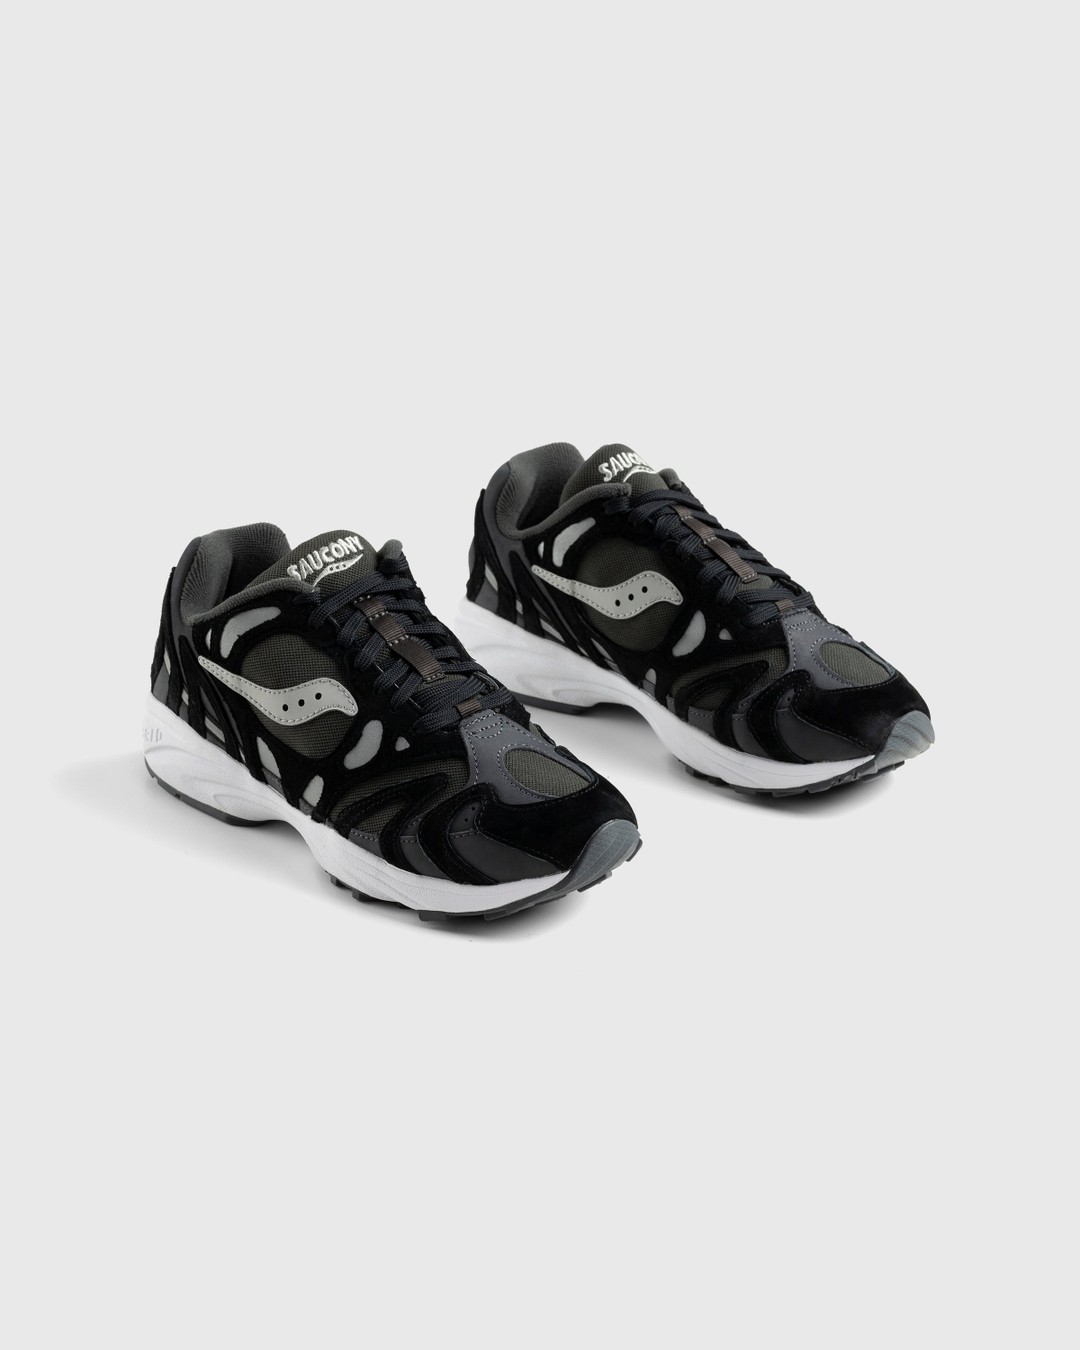 Saucony – Grid Azura 2000 Black/Silver - Sneakers - Black - Image 3